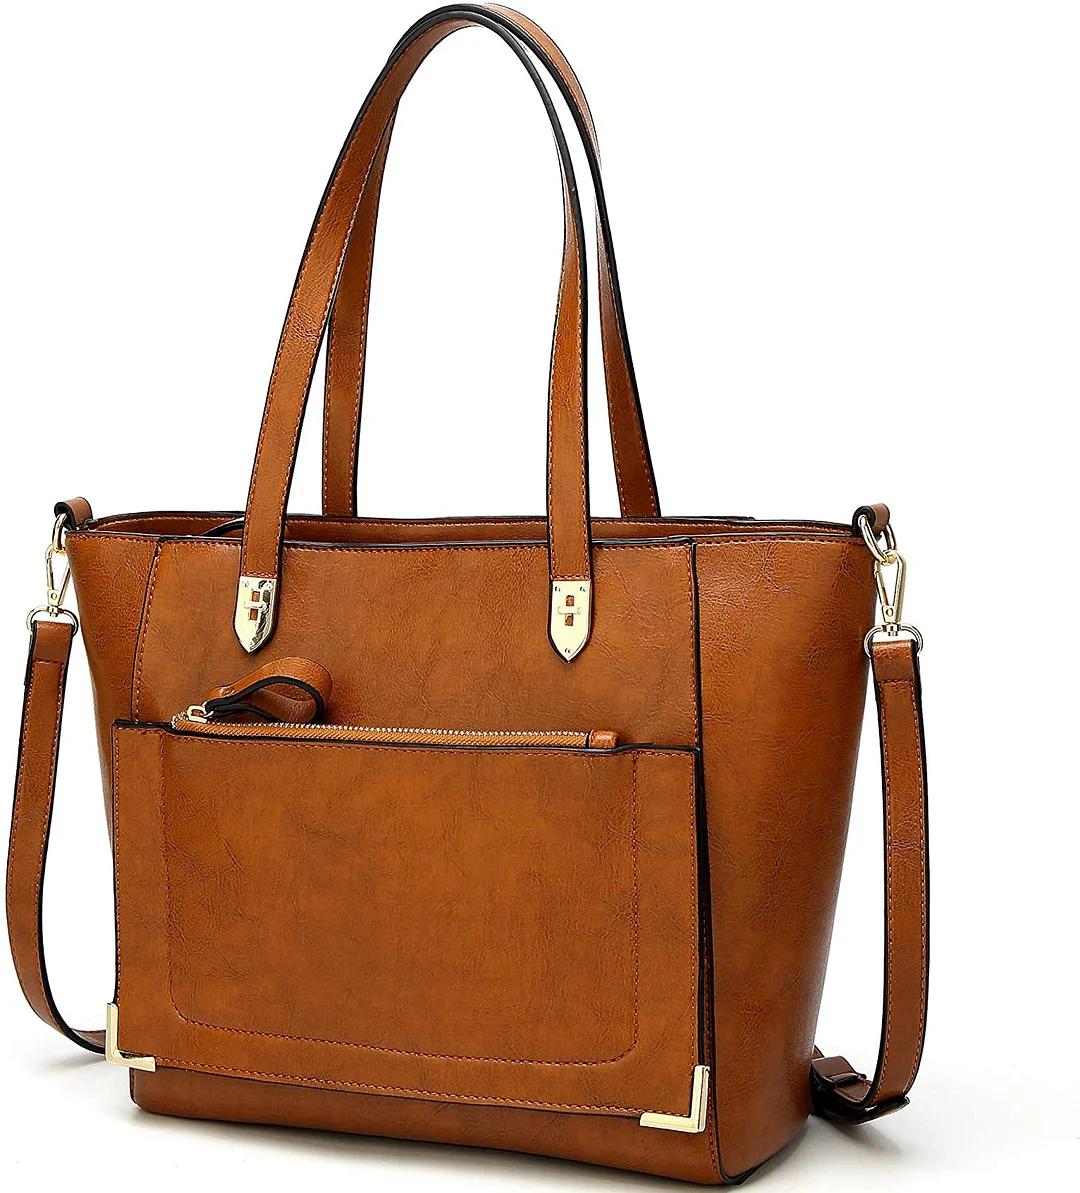 Satchel Purses and Handbags for Women Shoulder Tote Bags